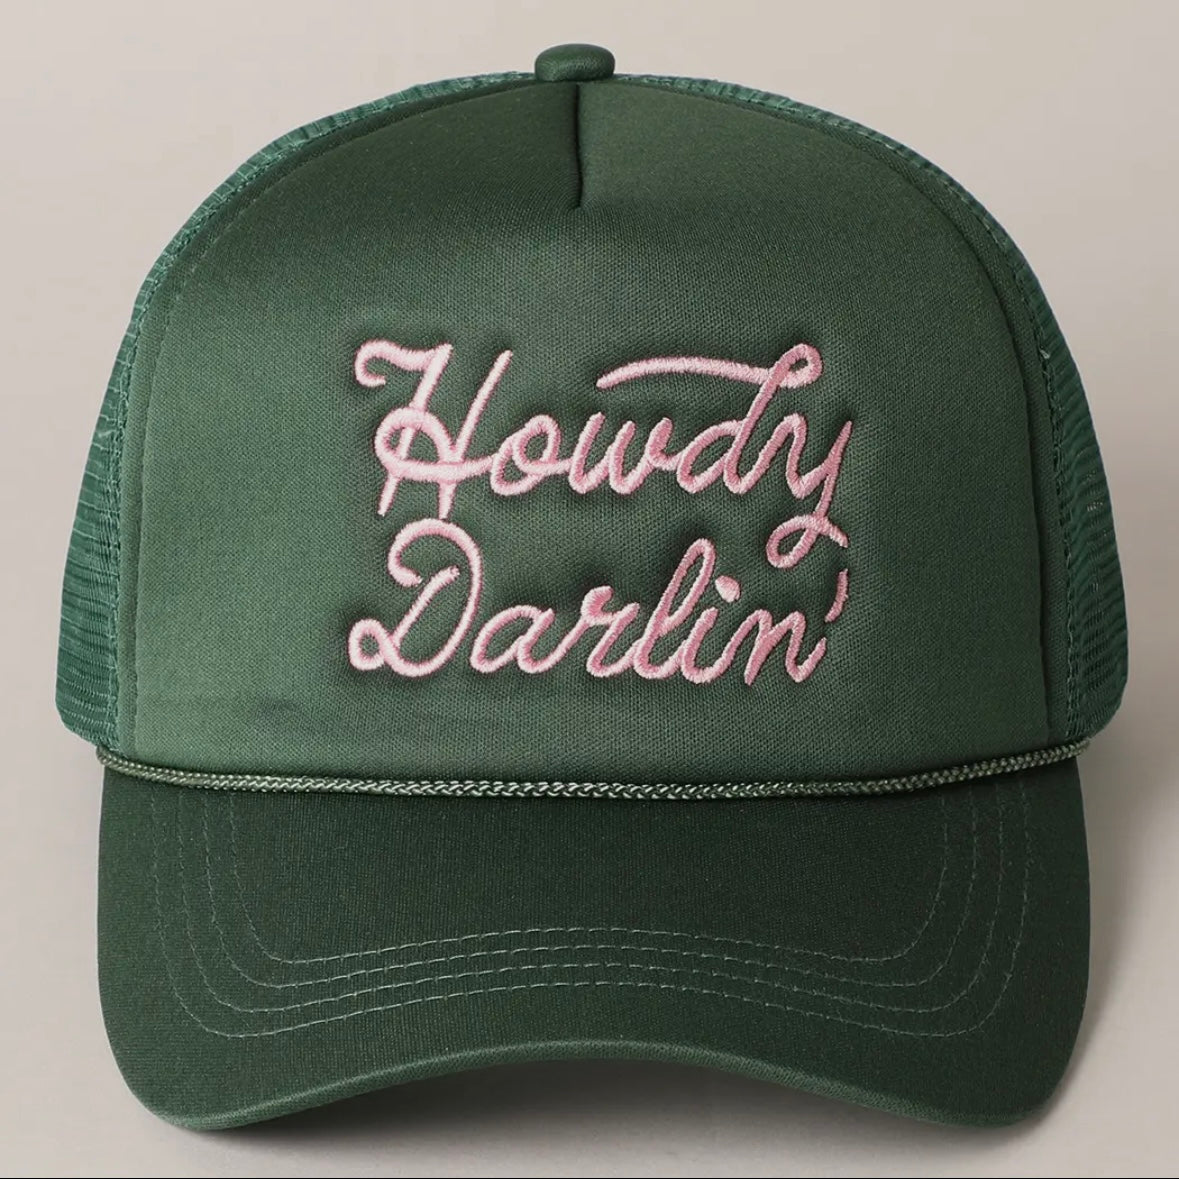 “Howdy Darlin” hat (green)